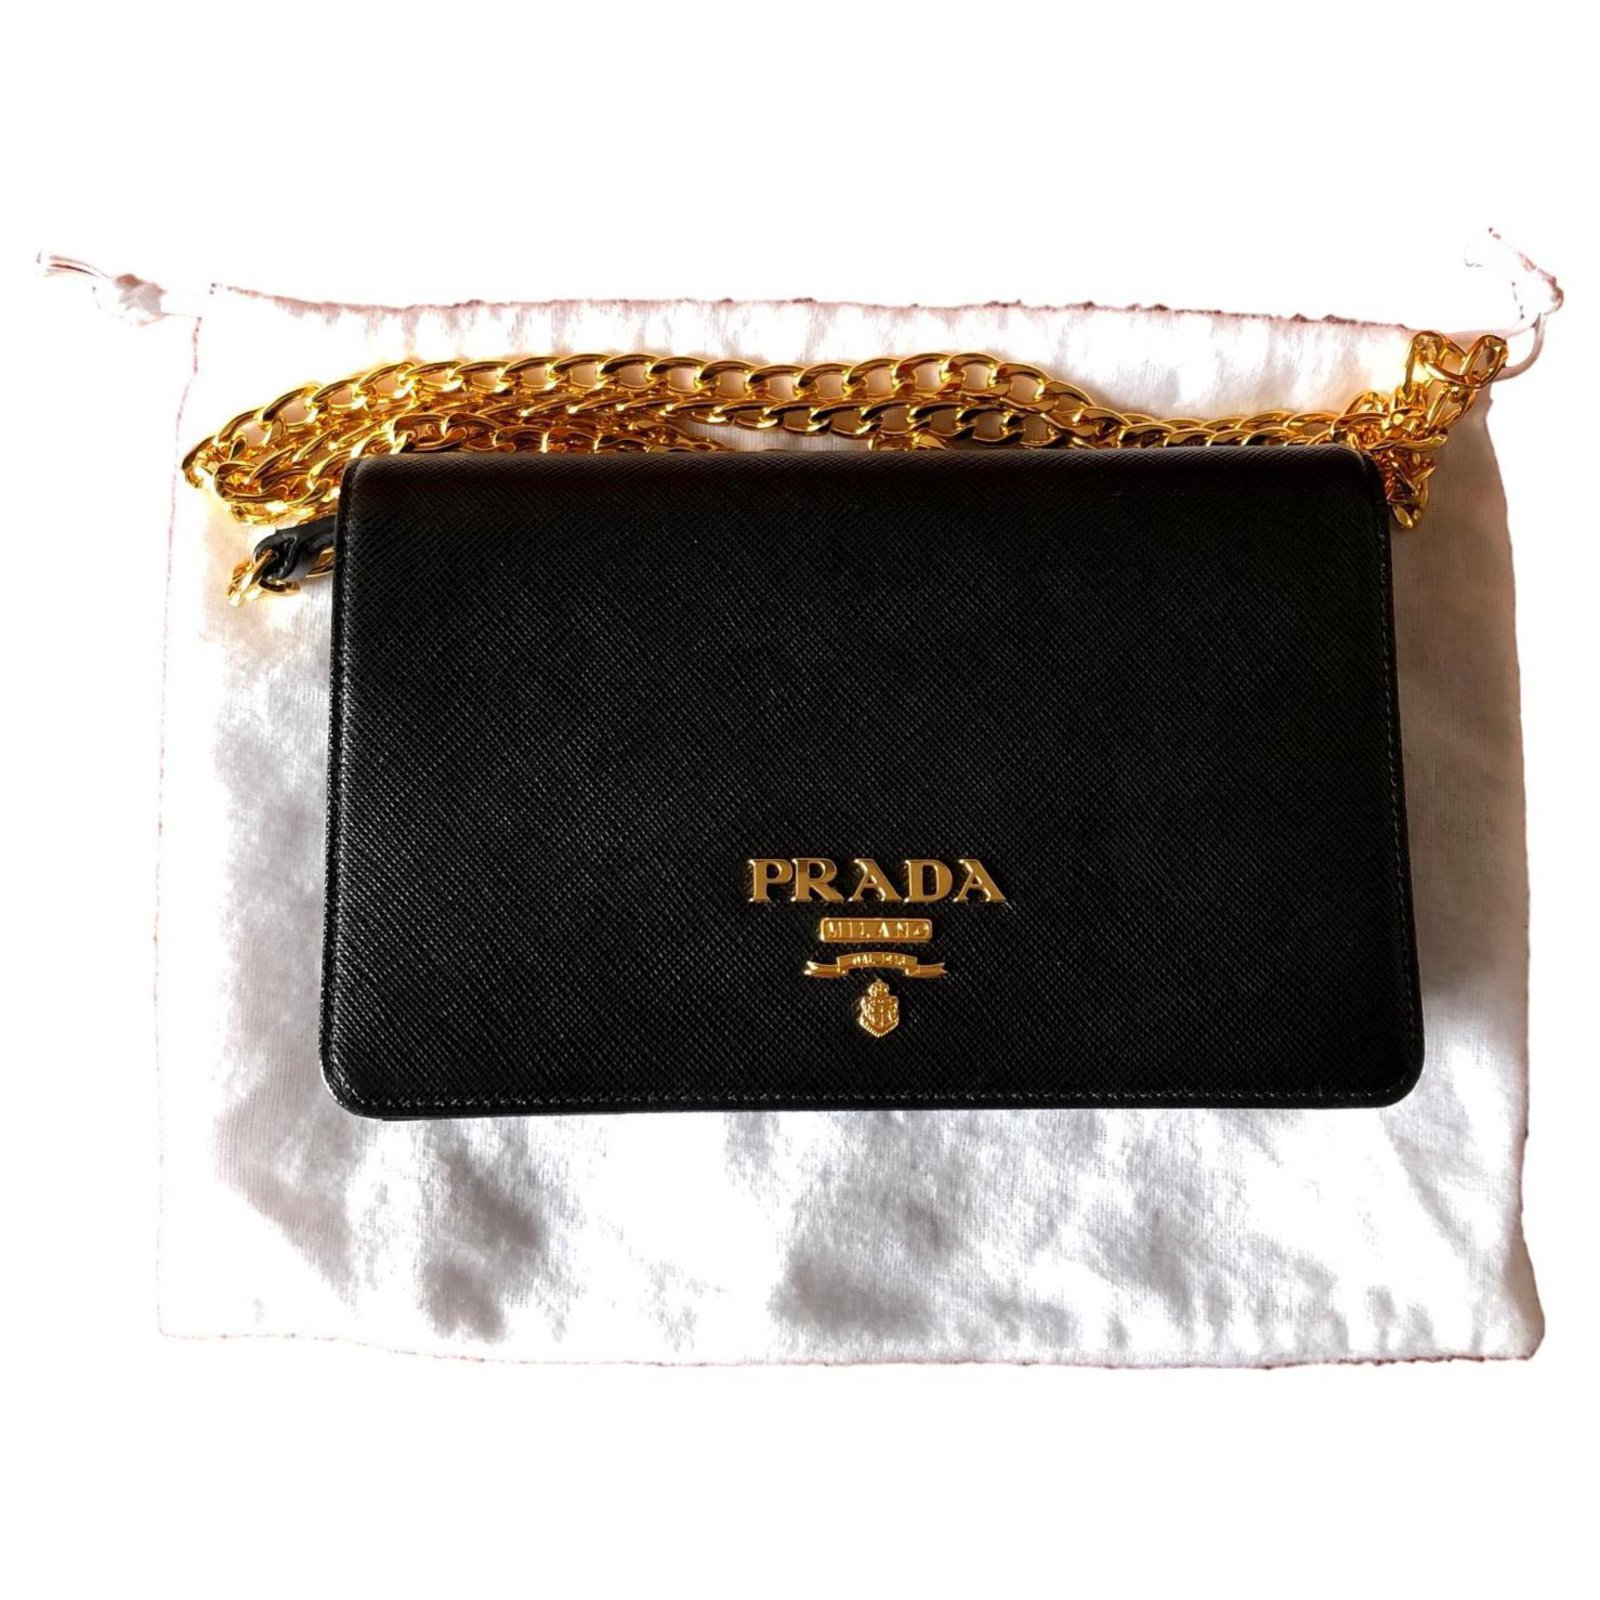 prada crossbody purse